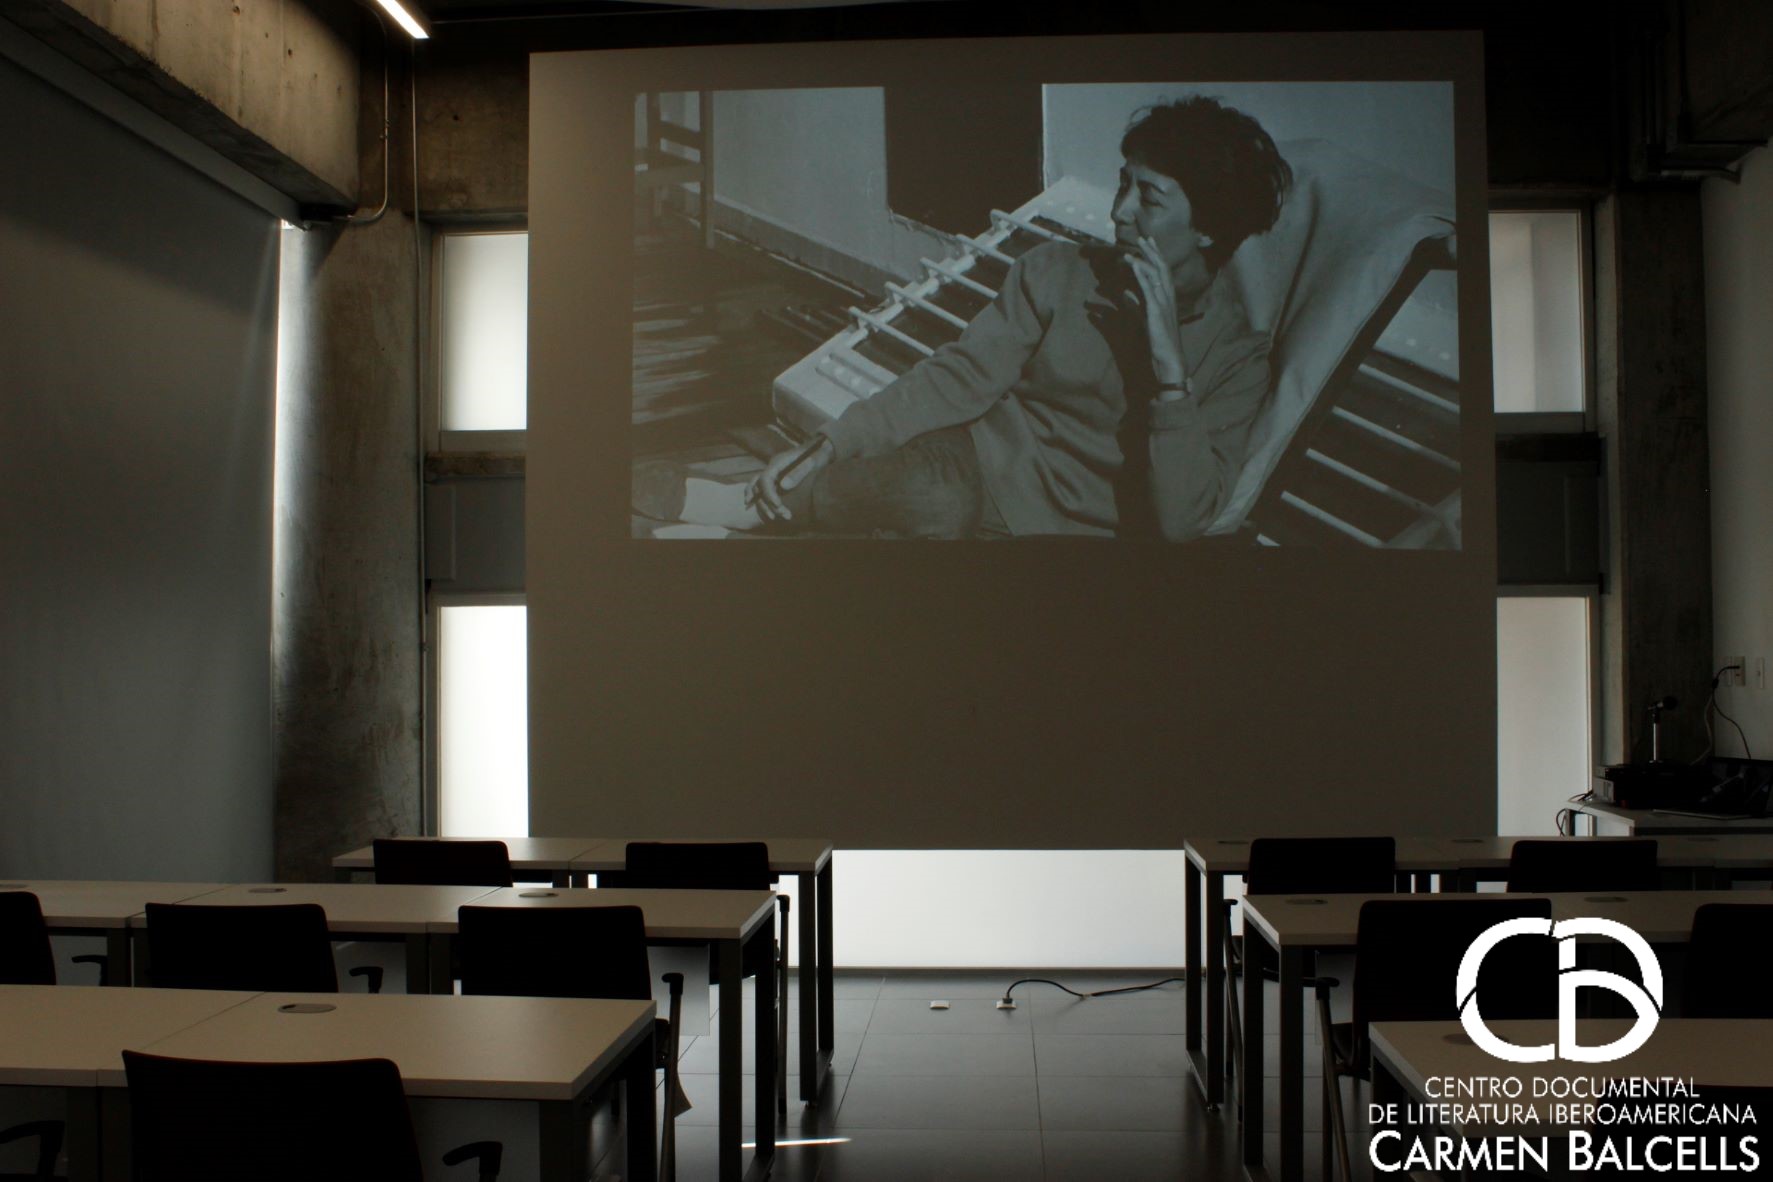 Imagen del documental "La vuelta al día" en pantalla de la sala de proyecciones del CDCB Foto: Mariana Abreu